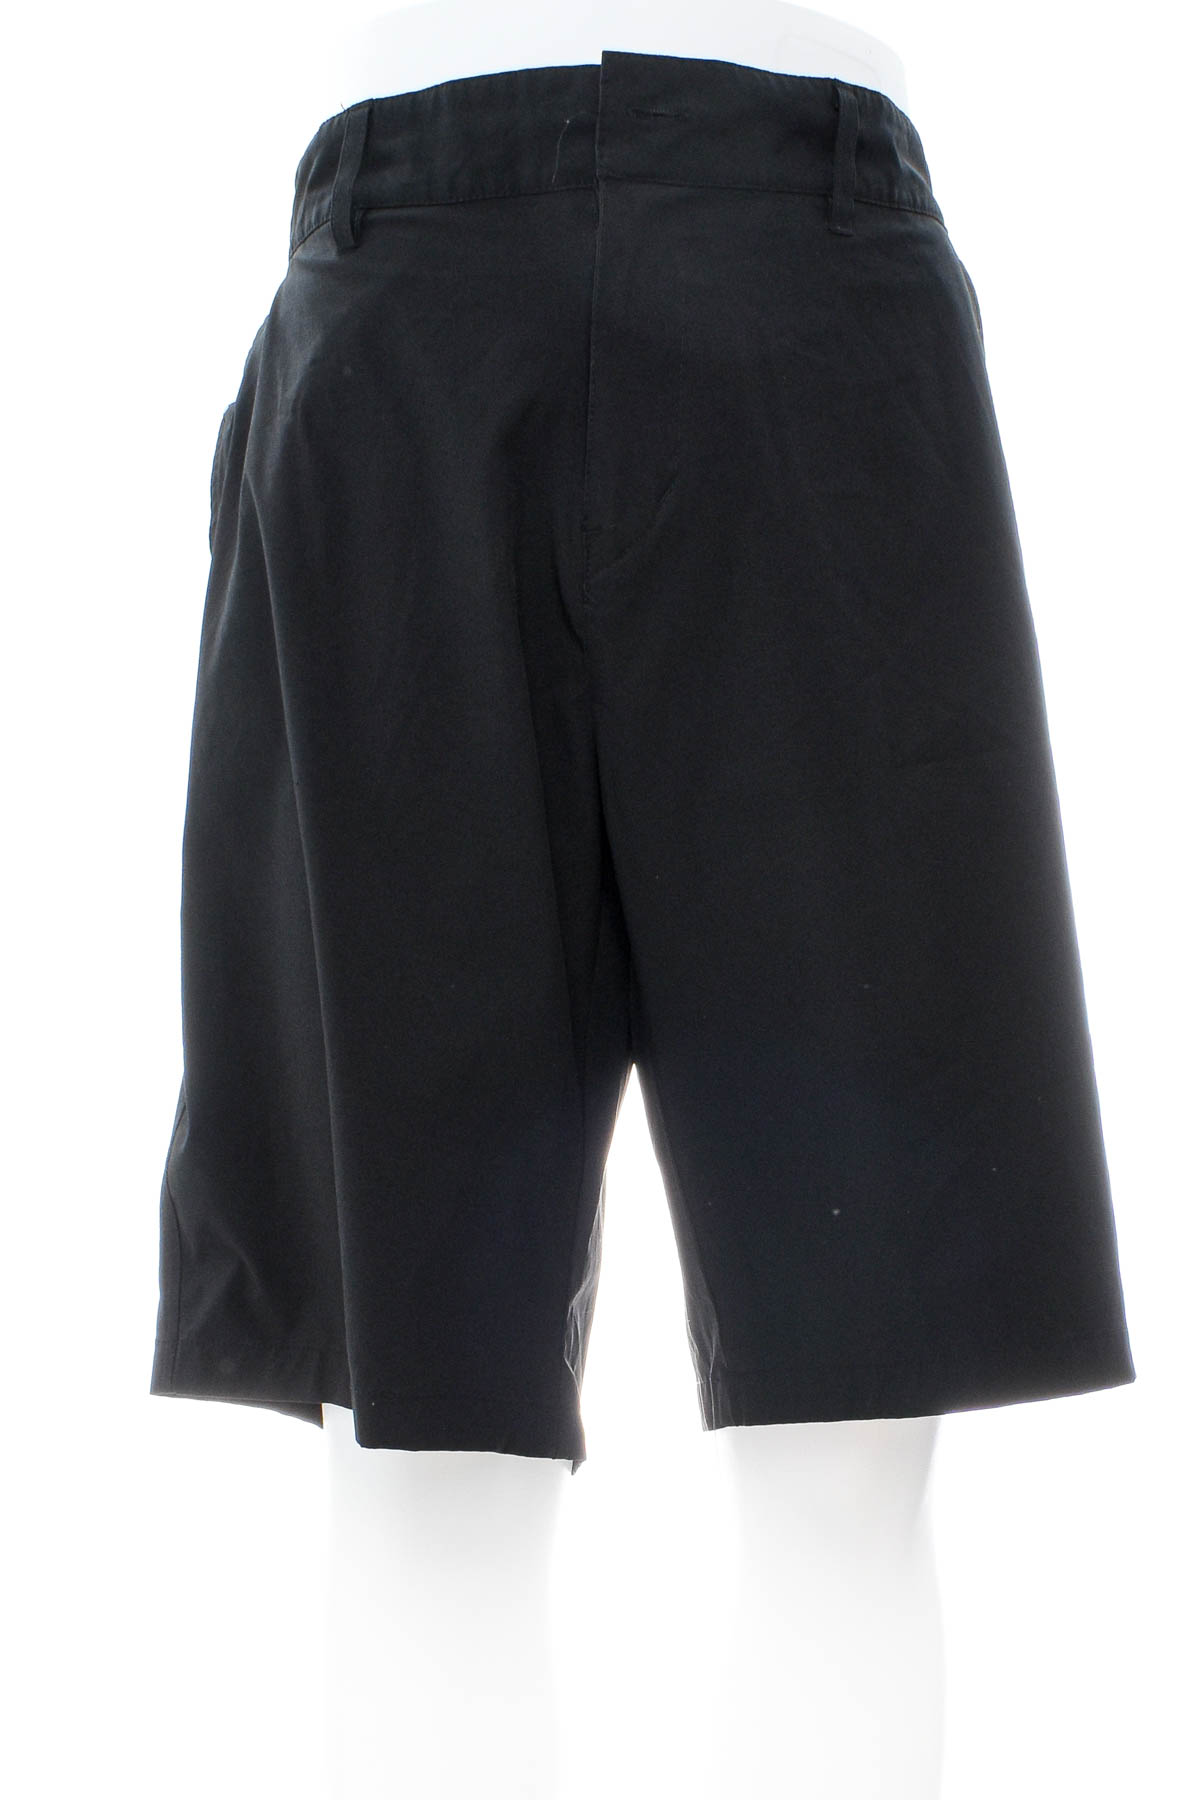 Pantaloni scurți bărbați - OPFLEX - 0